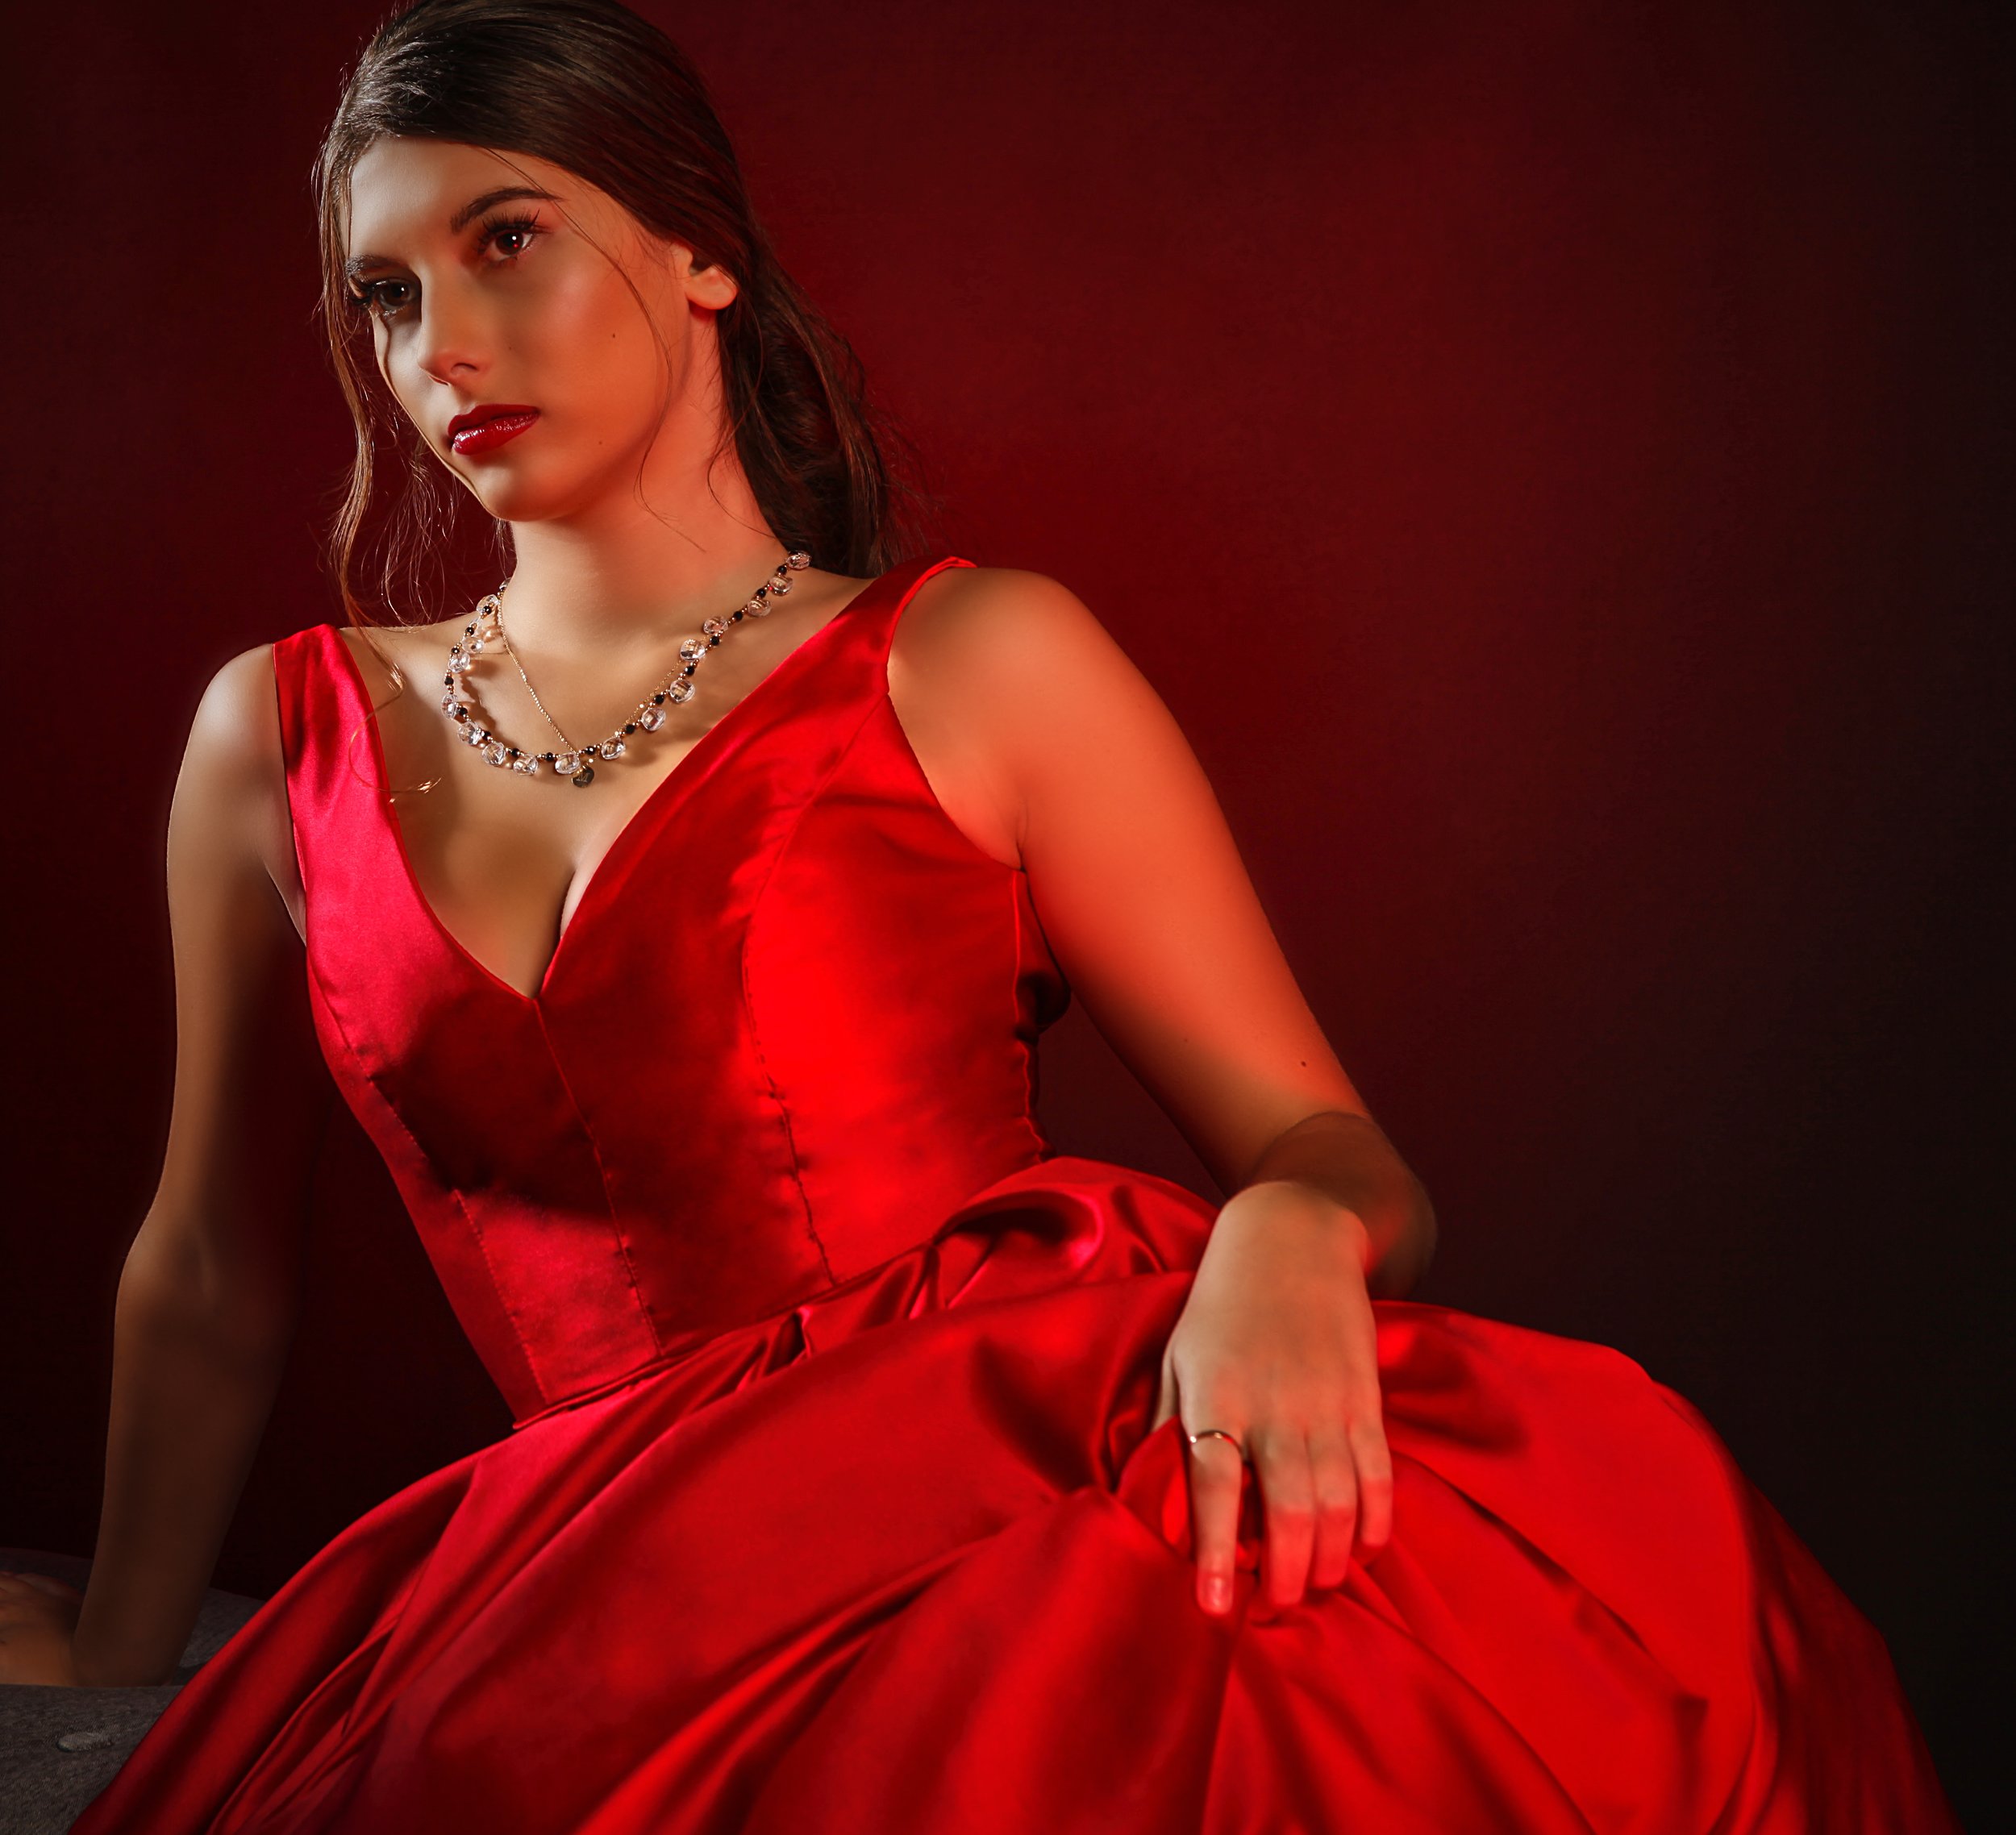 Model In Red Dress Sitting_5172 copy.jpg